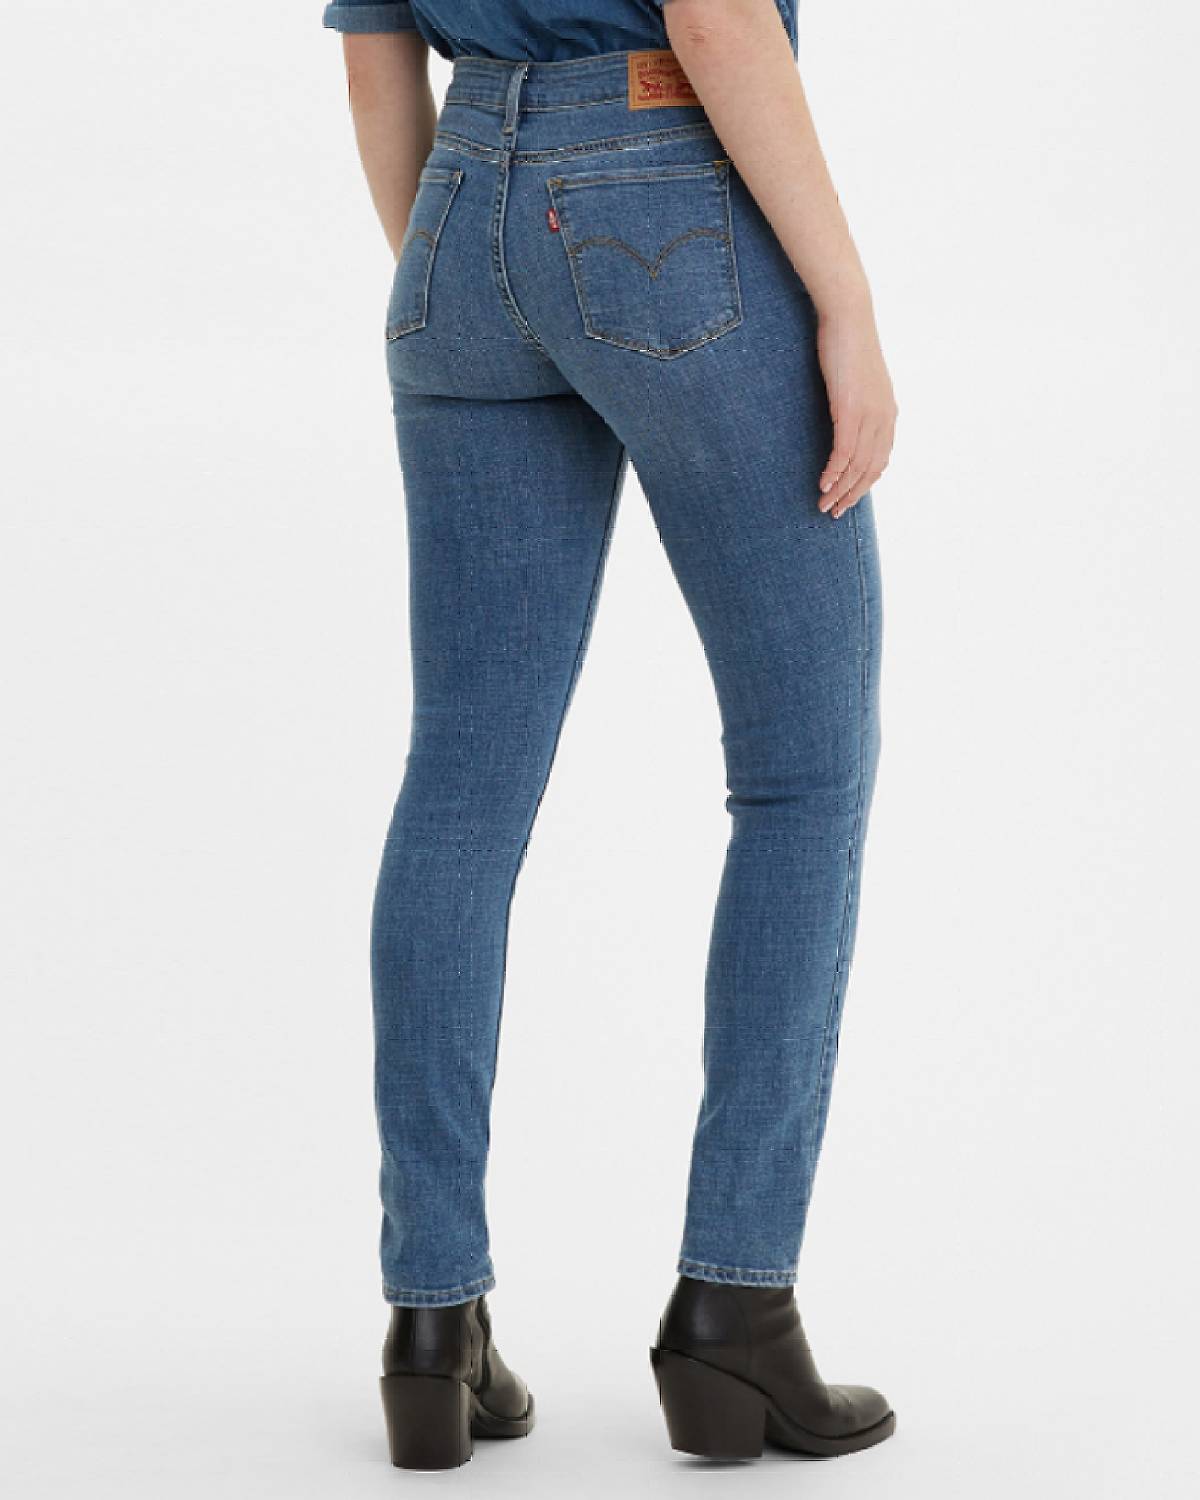 Woman in slim jeans